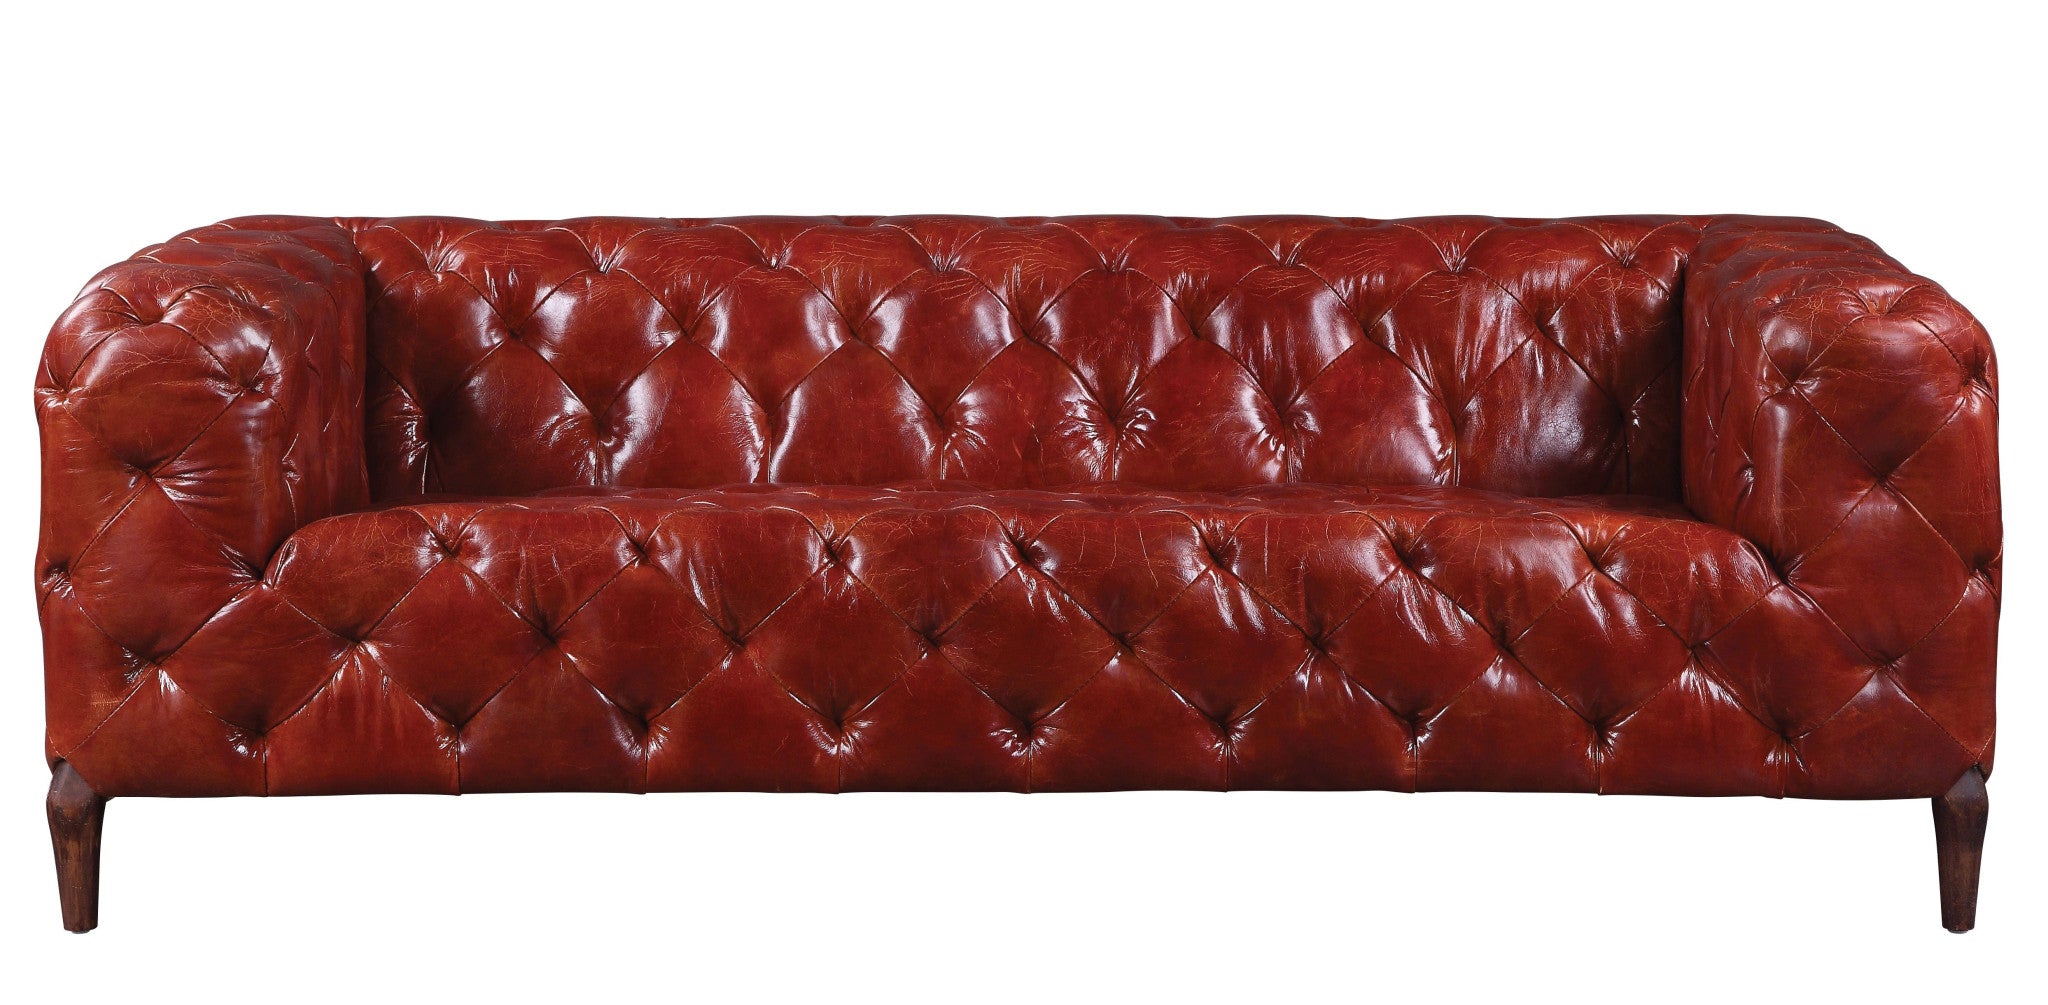 85" Merlot Top Grain Leather Sofa With Black Legs